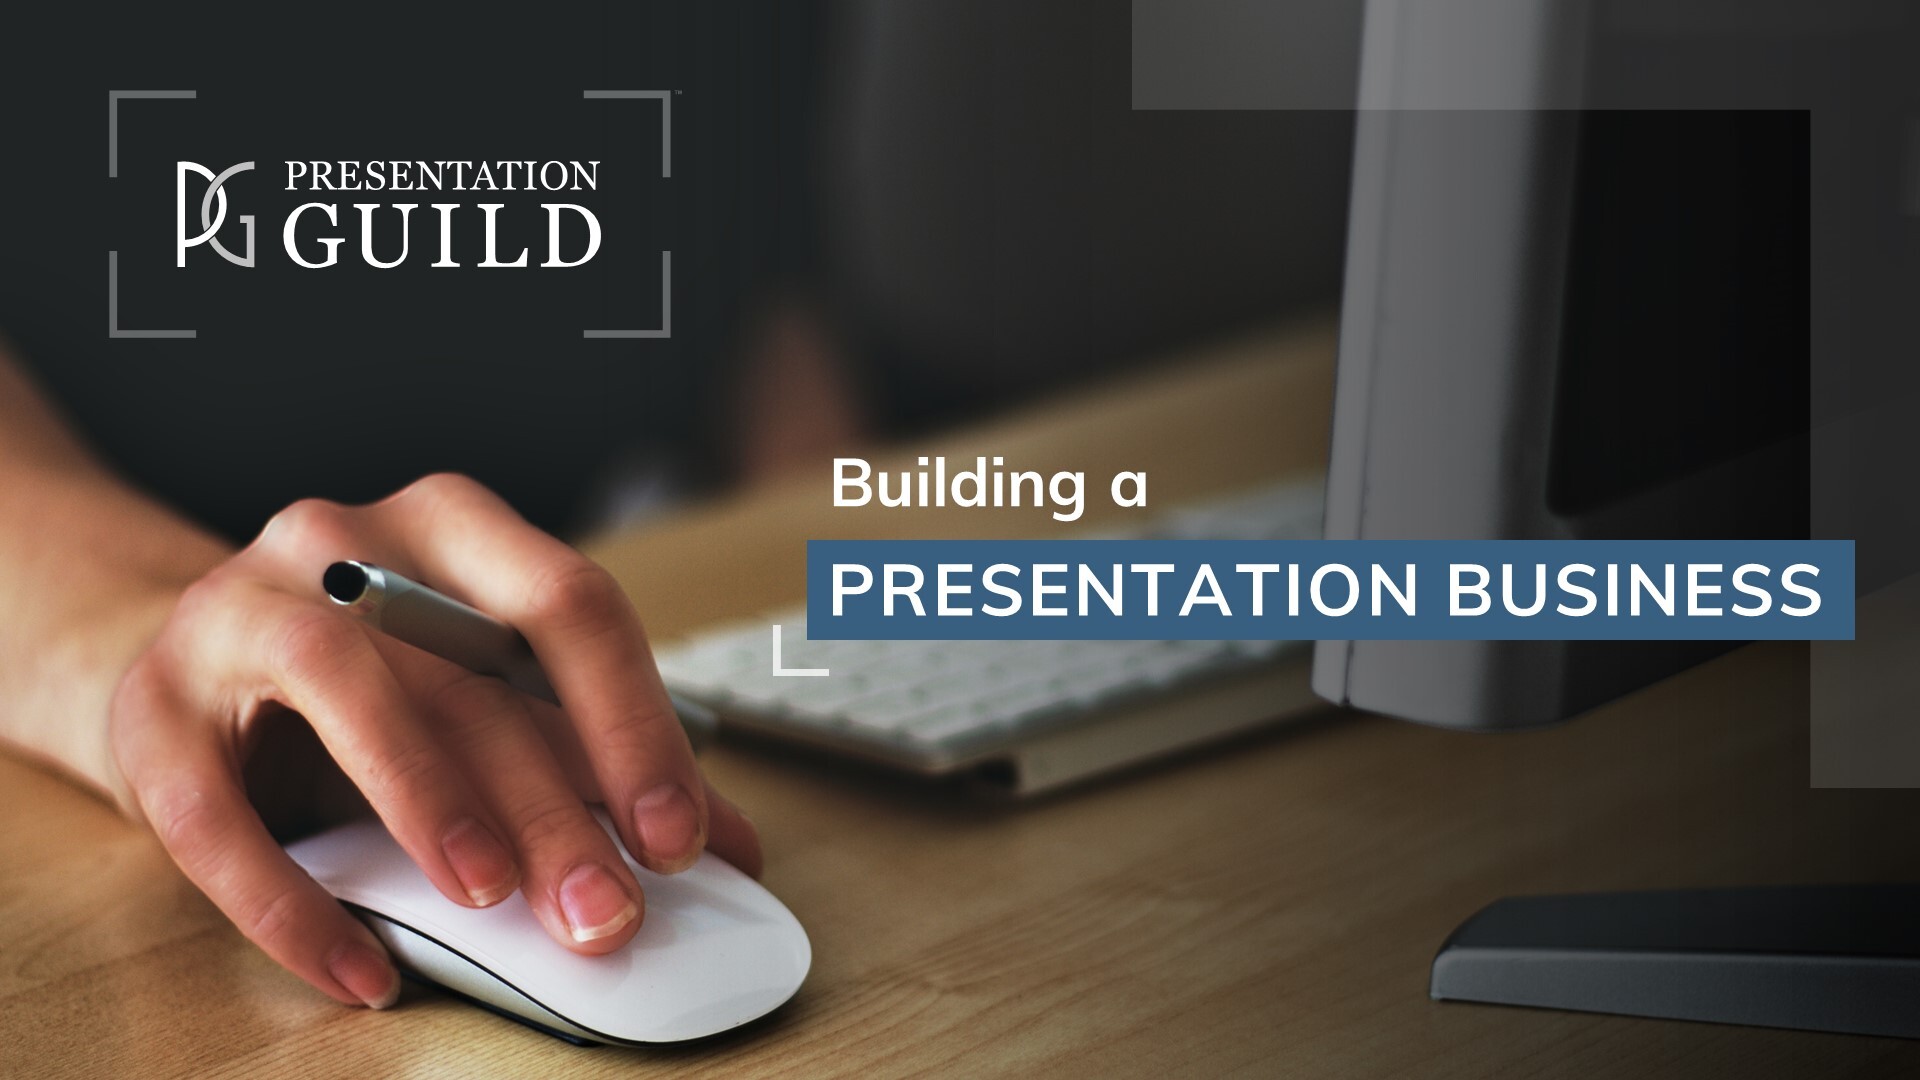 Building a Presentation Business | Presentation Guild